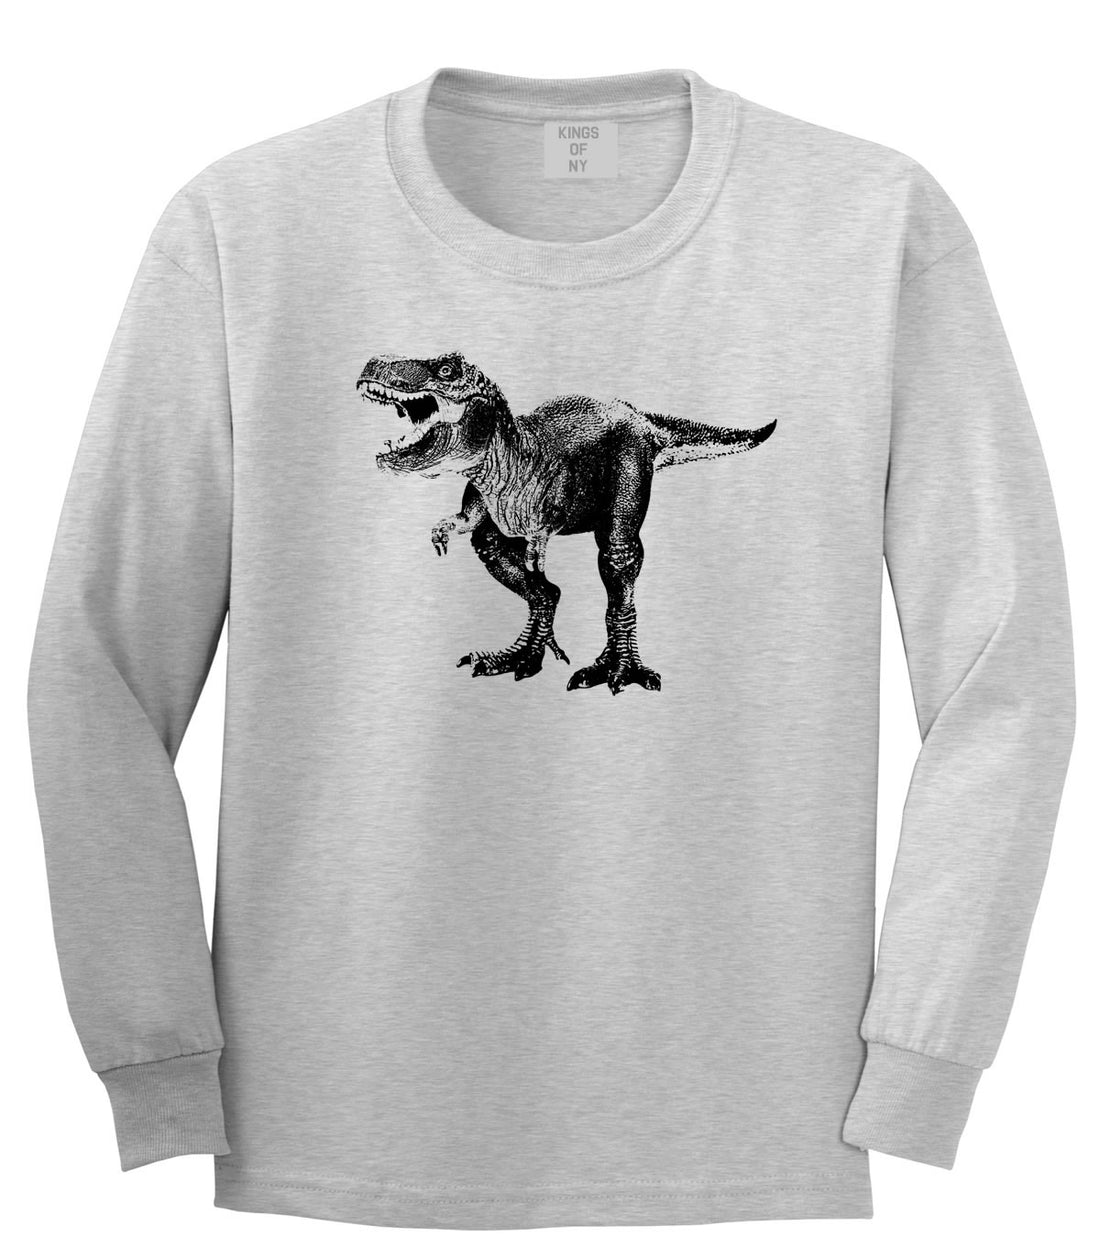 T-Rex Dinosaur Long Sleeve T-Shirt By Kings Of NY